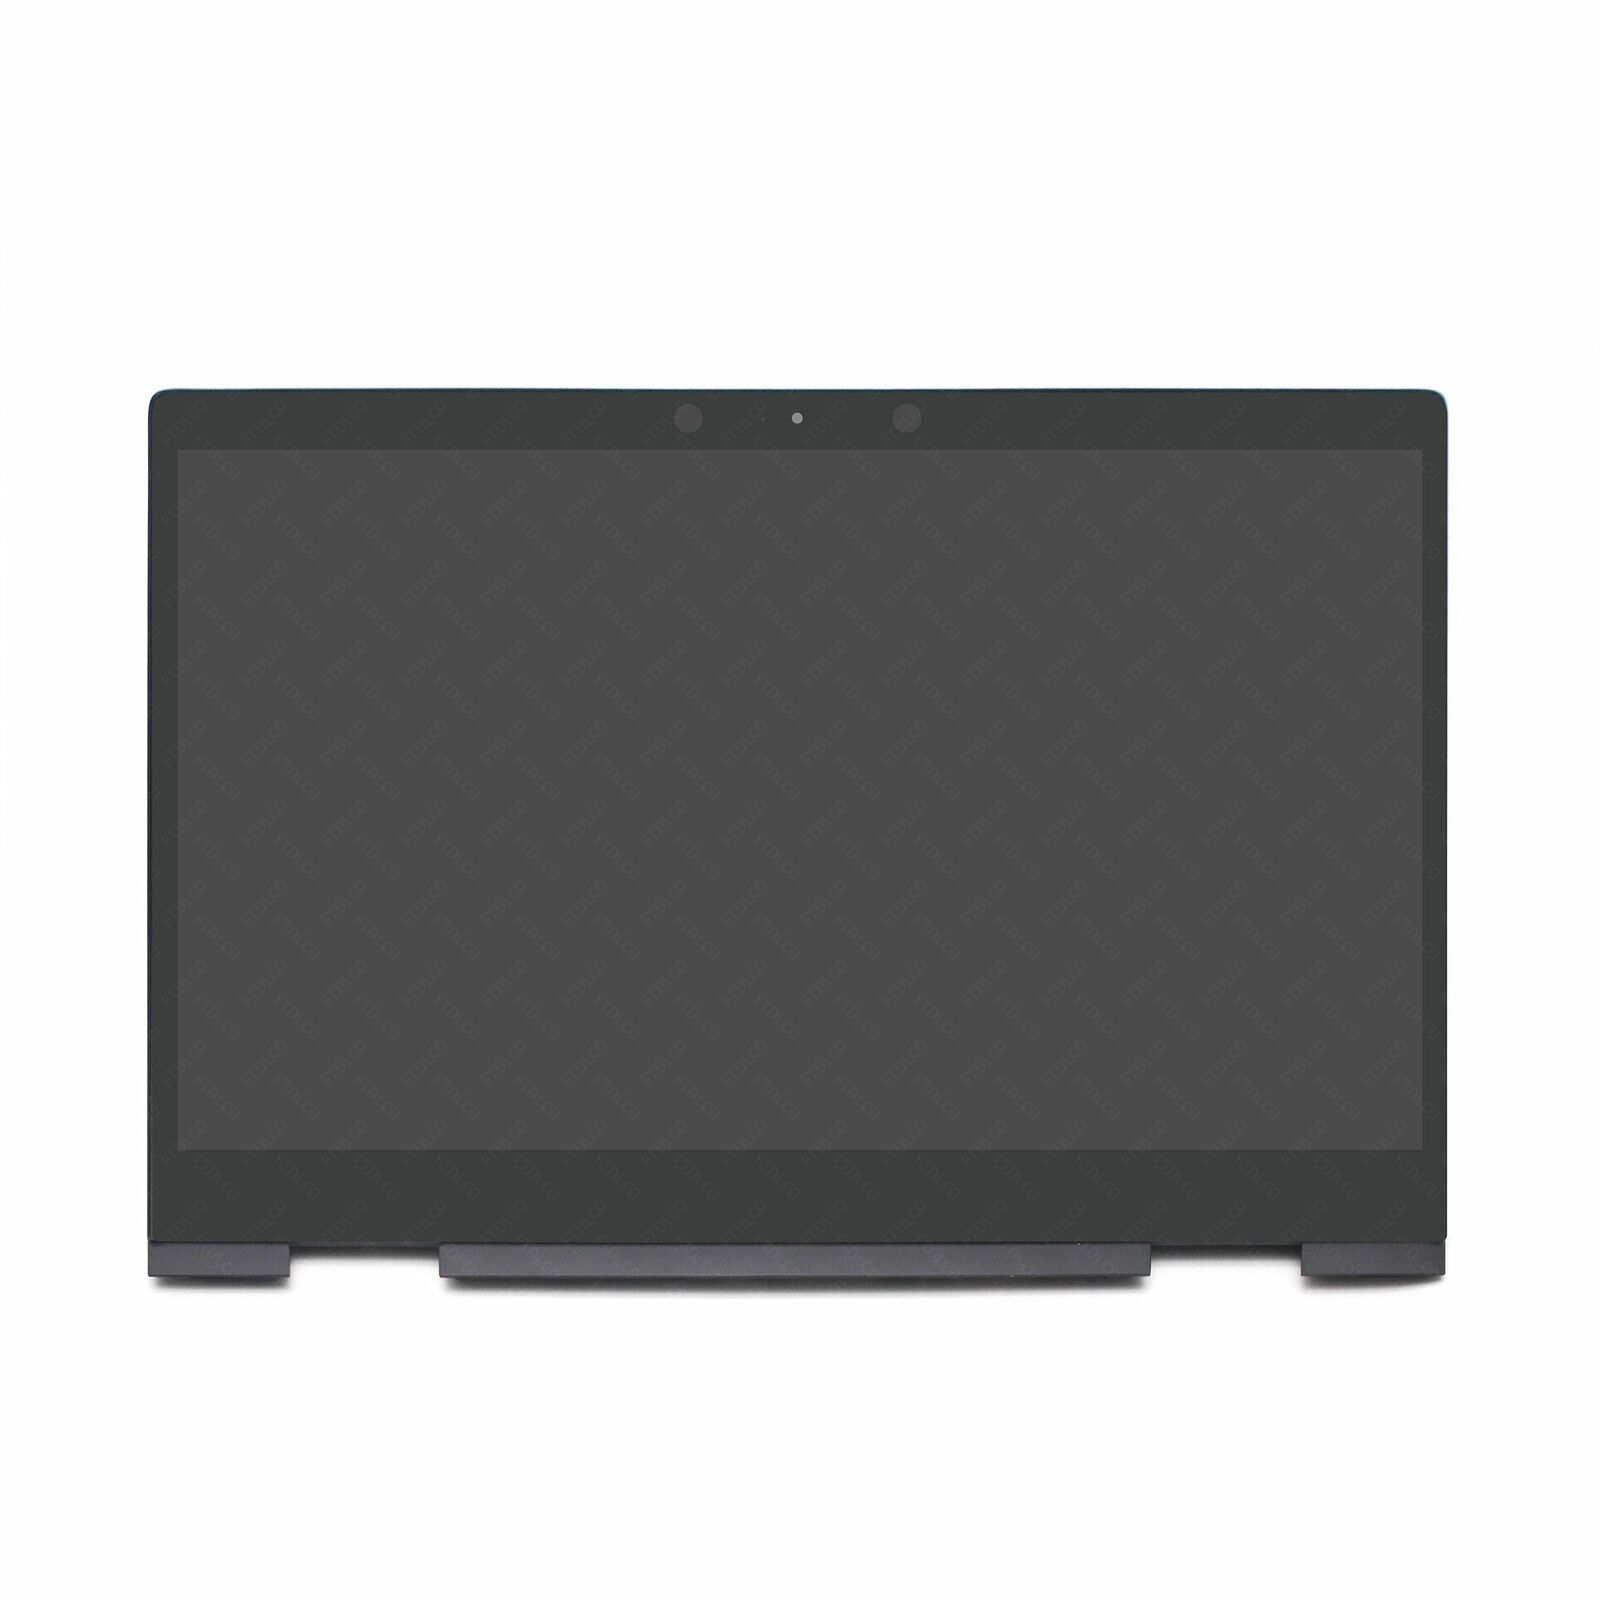 15.6'' For HP Envy X360 15-bq276nr IPS LCD Touch Screen Digitizer Assembly+Bezel